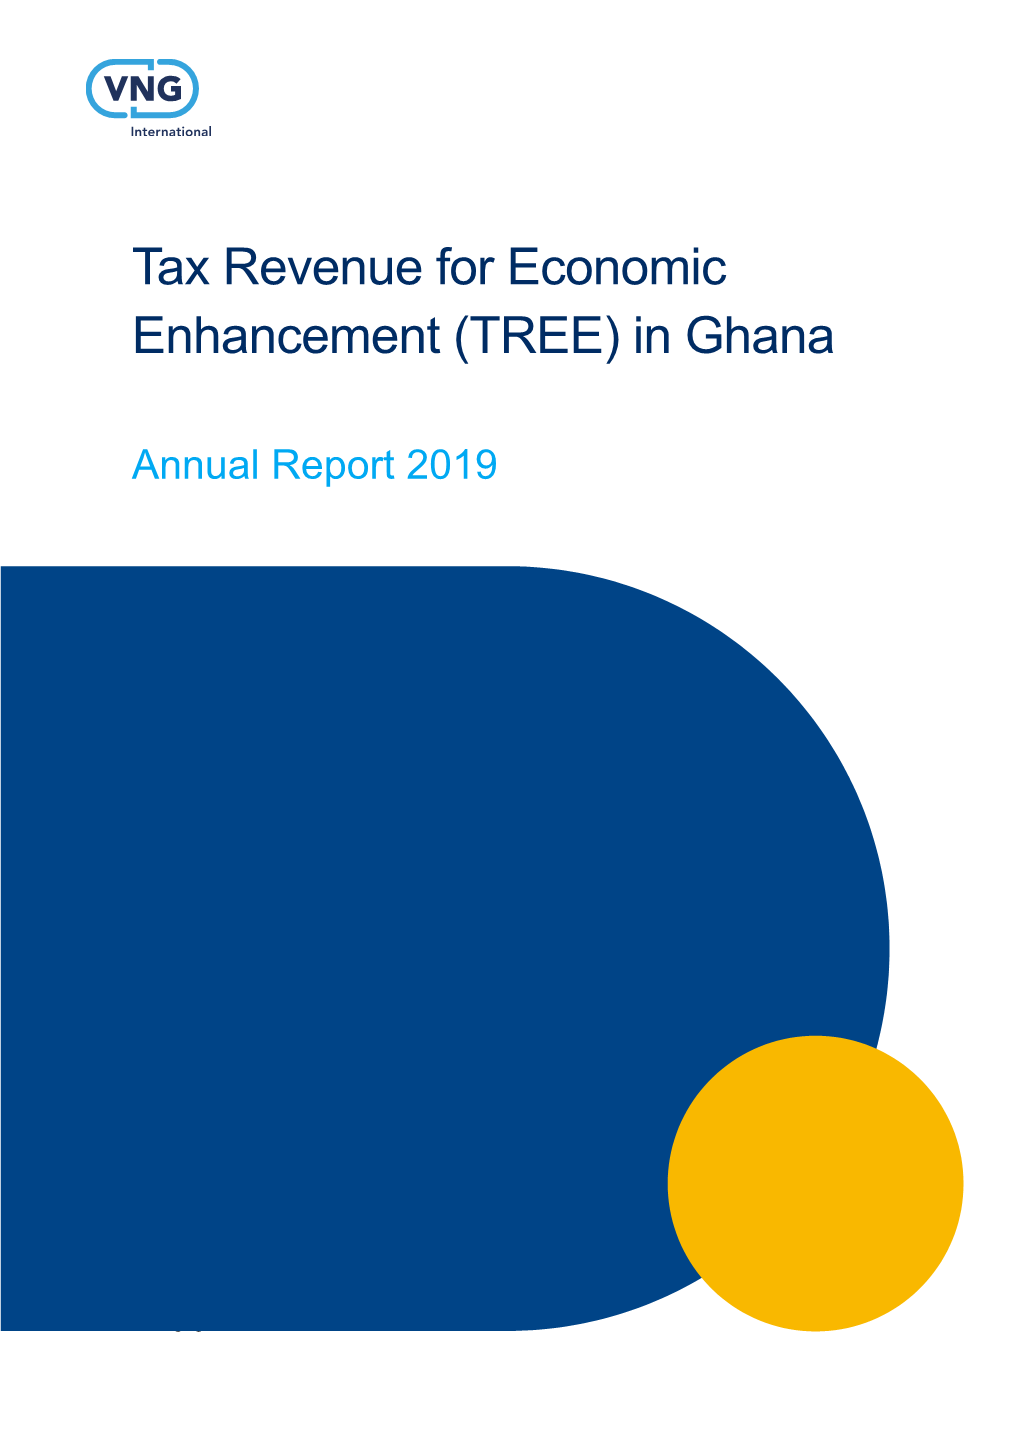 Tax Revenue for Economic Enhancement (TREE) in Ghana